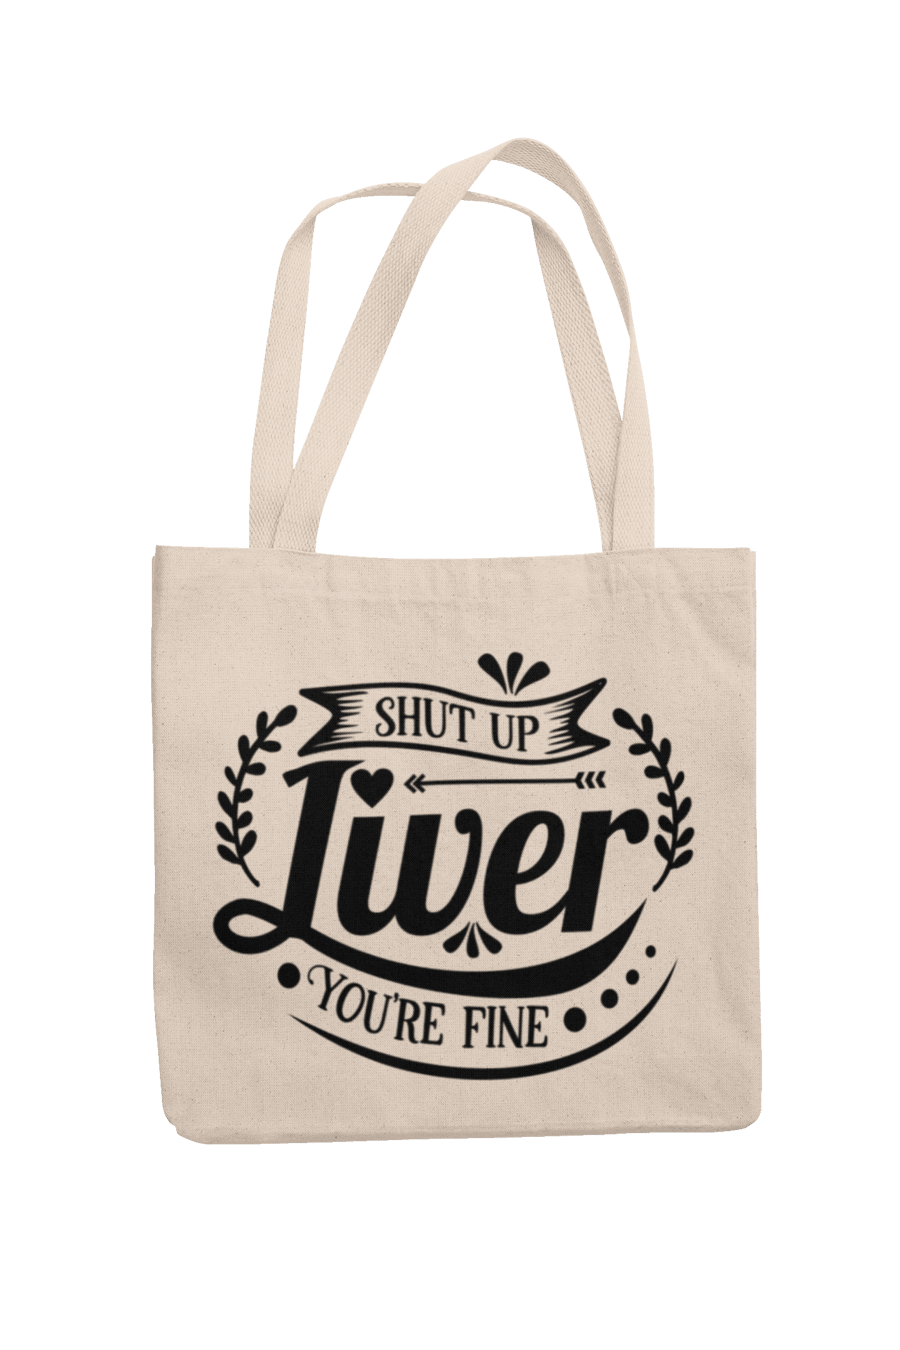 Shut Up Liver Your Fine- Novelty Drinking Tote Bag